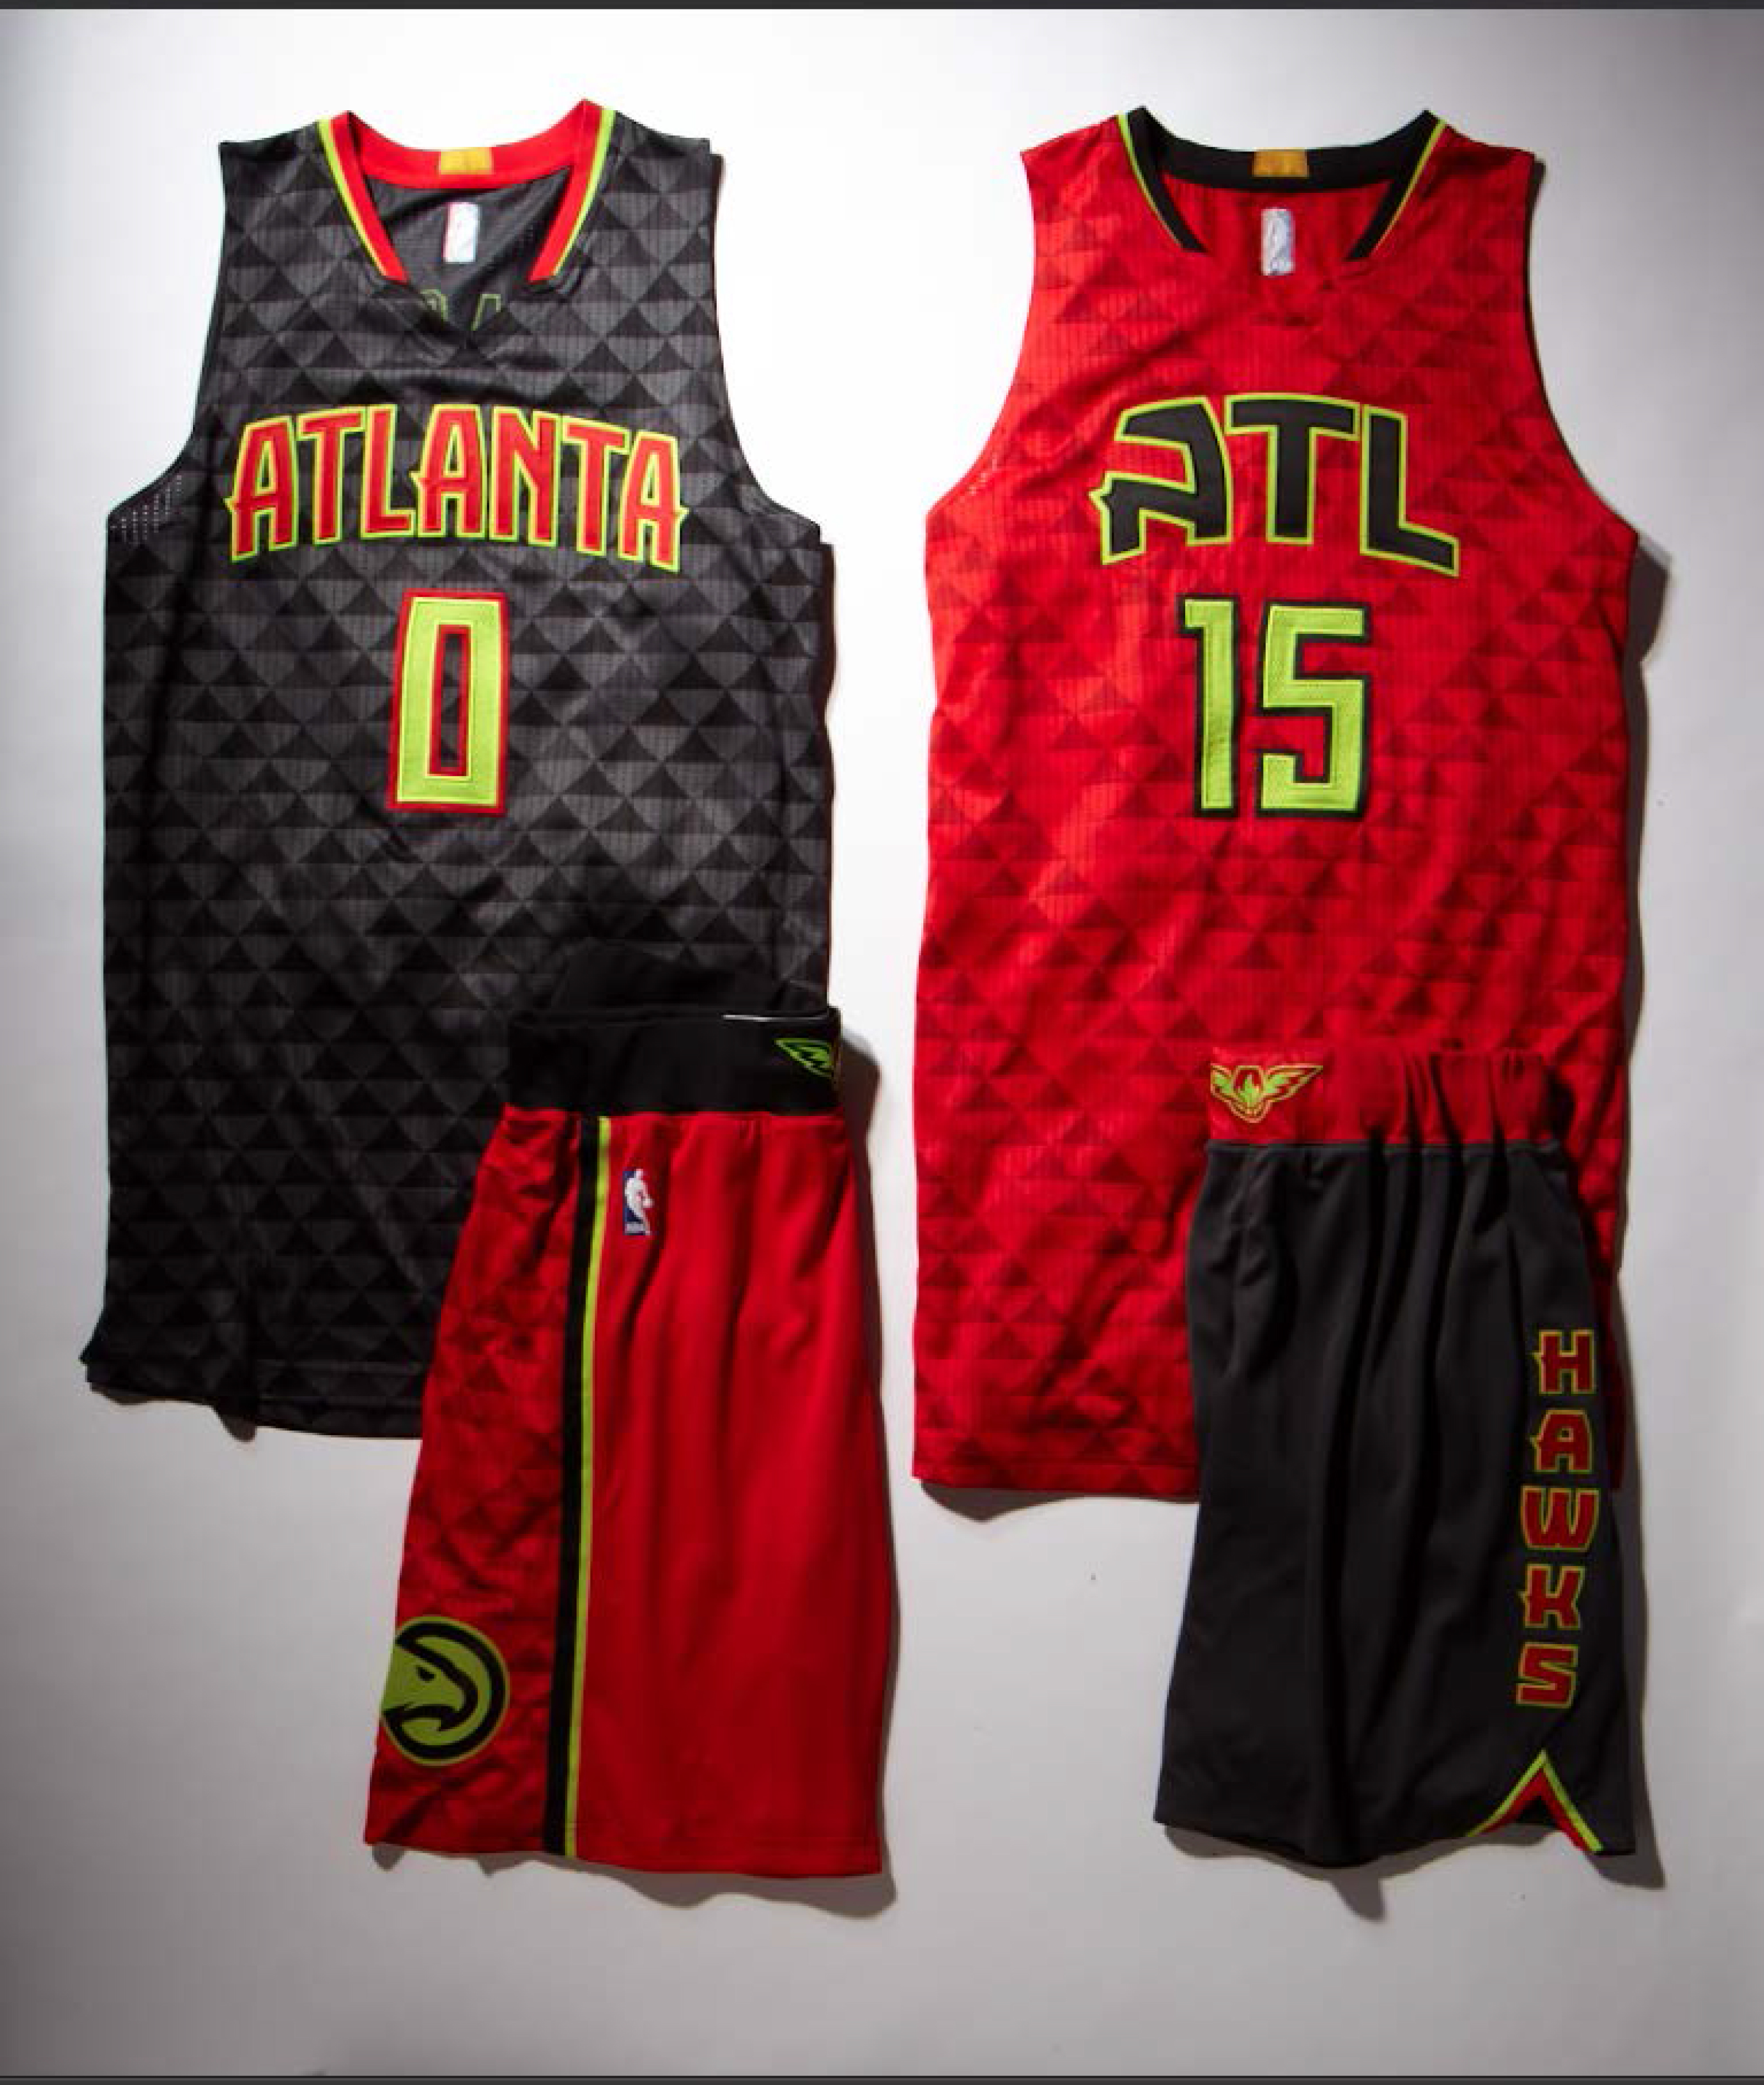 Hawks new uniforms unveiled